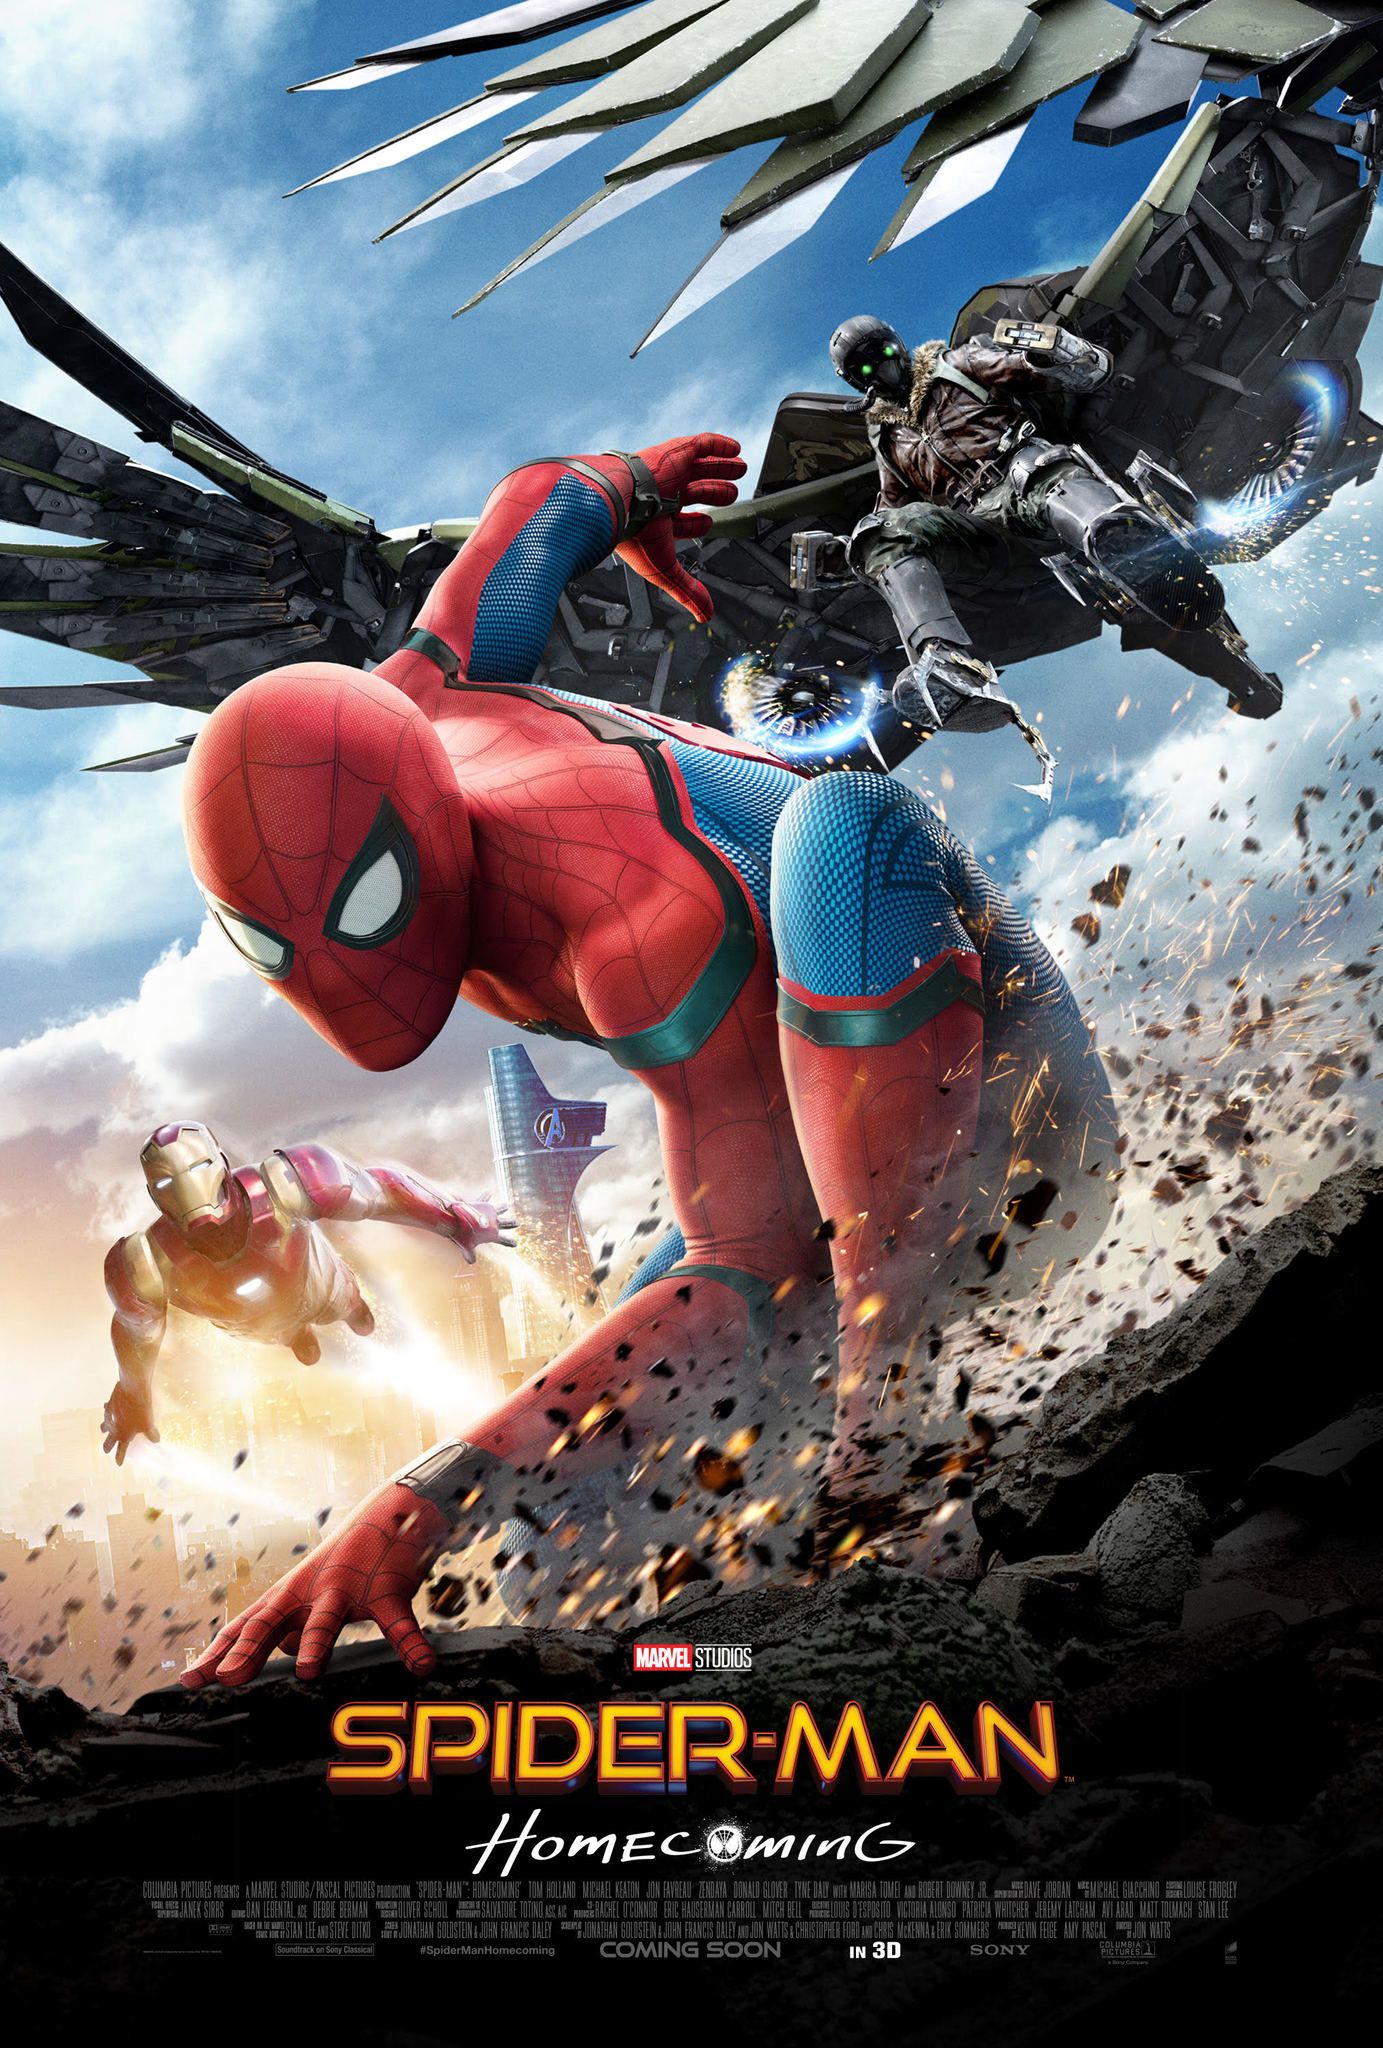 SpiderMan Homecoming  (2017) Hindi Dubbed Full Movie